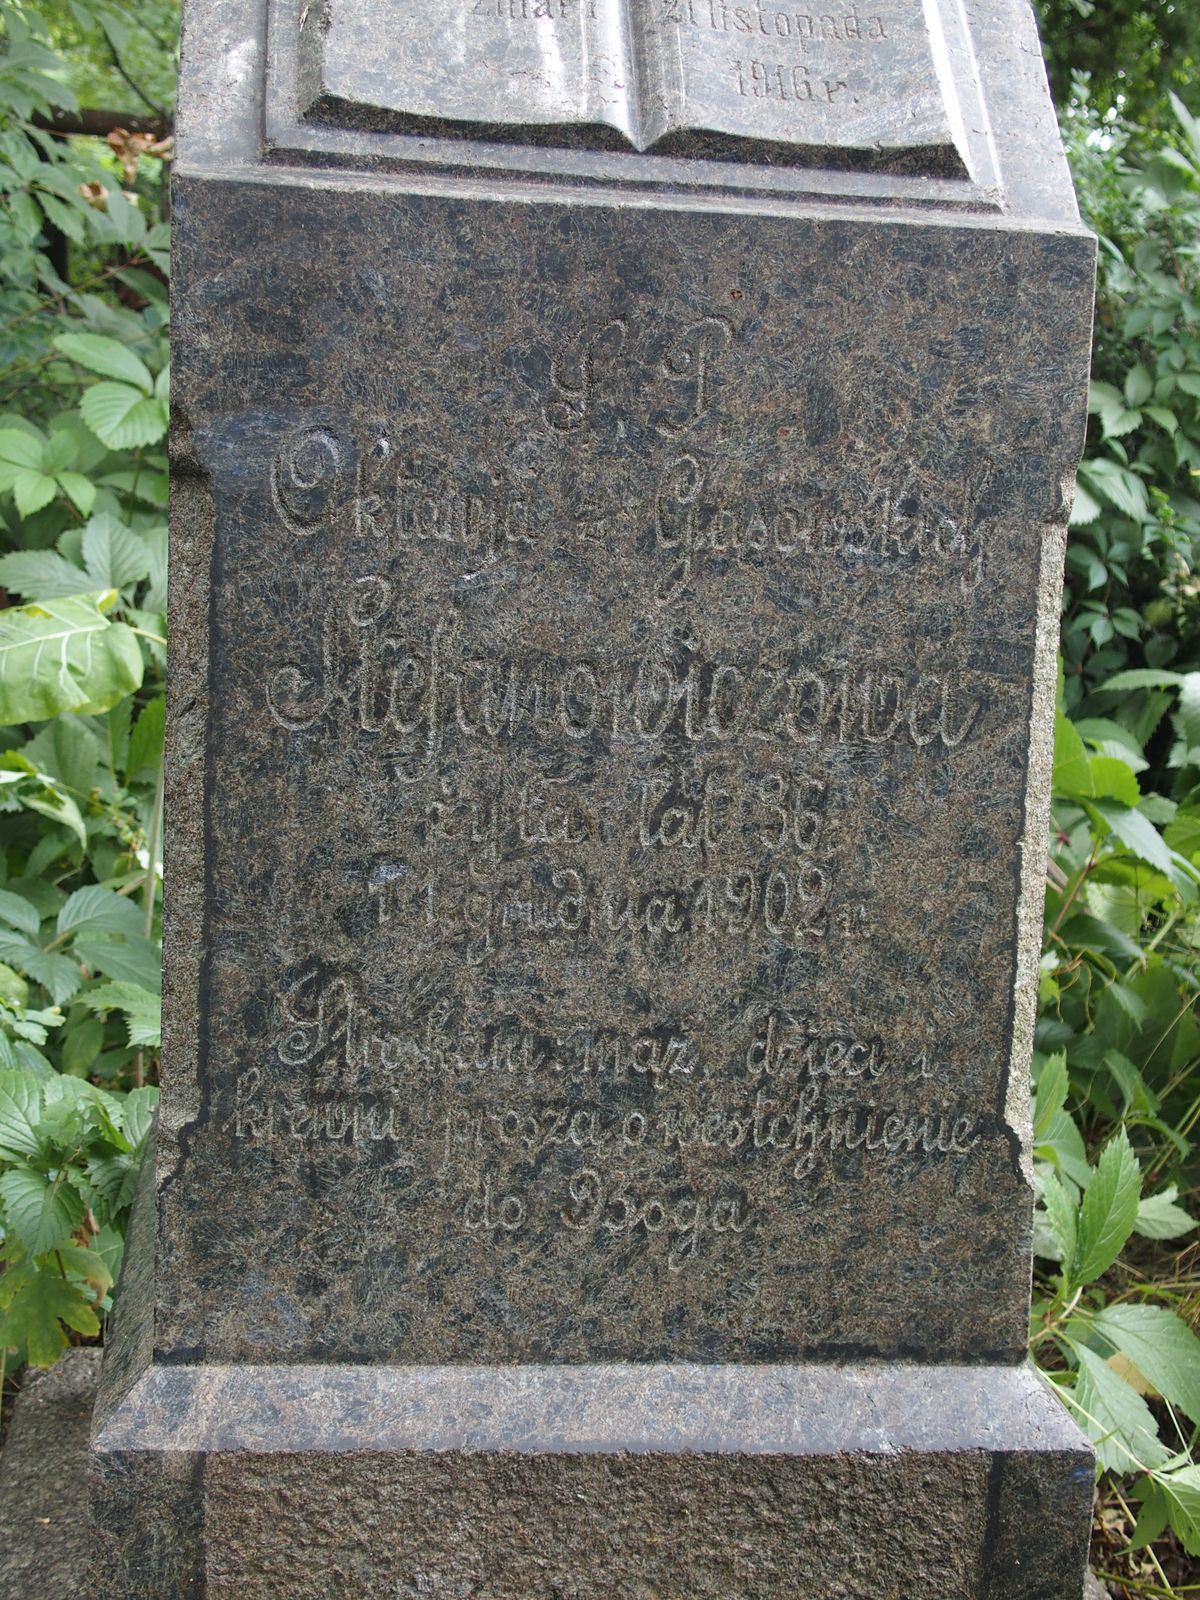 Inscription from the gravestone of Jurek Ambrosevich, Octavia Stefanovichova, Bajkova cemetery, Kyiv, as of 2021